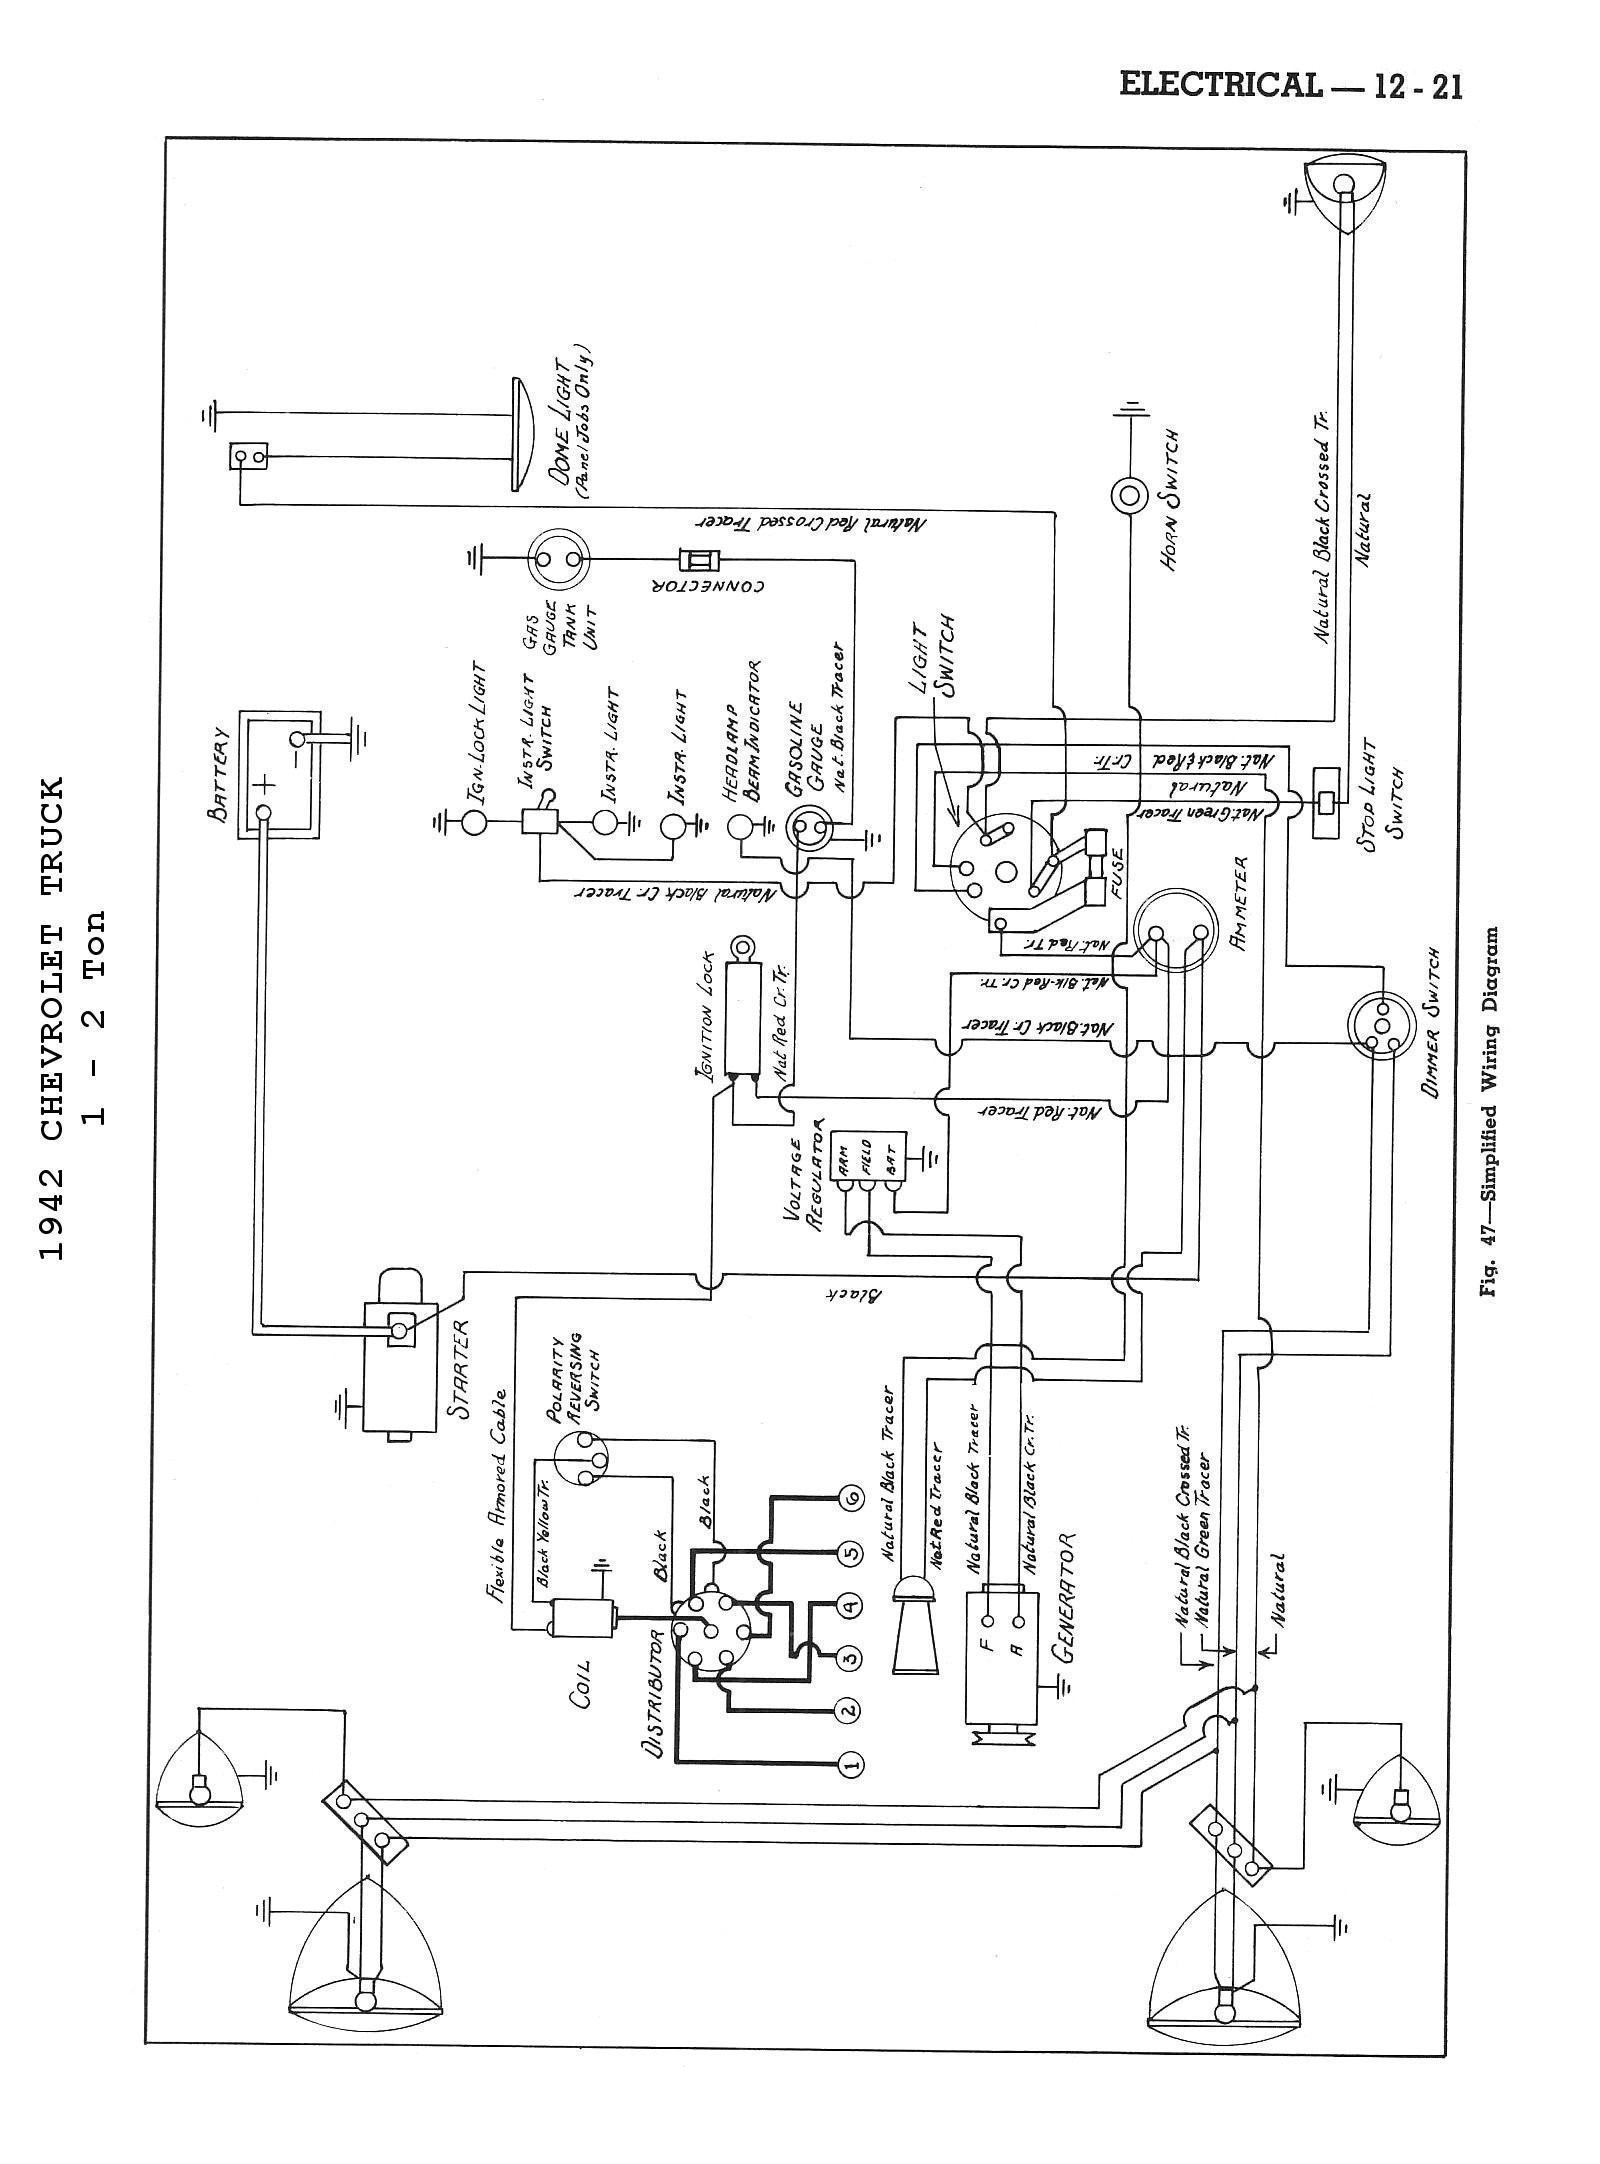 79 Chevy Truck Wiring Diagram Turn Signal Wiring Diagram Chevy Truck Shahsramblings Of 79 Chevy Truck Wiring Diagram